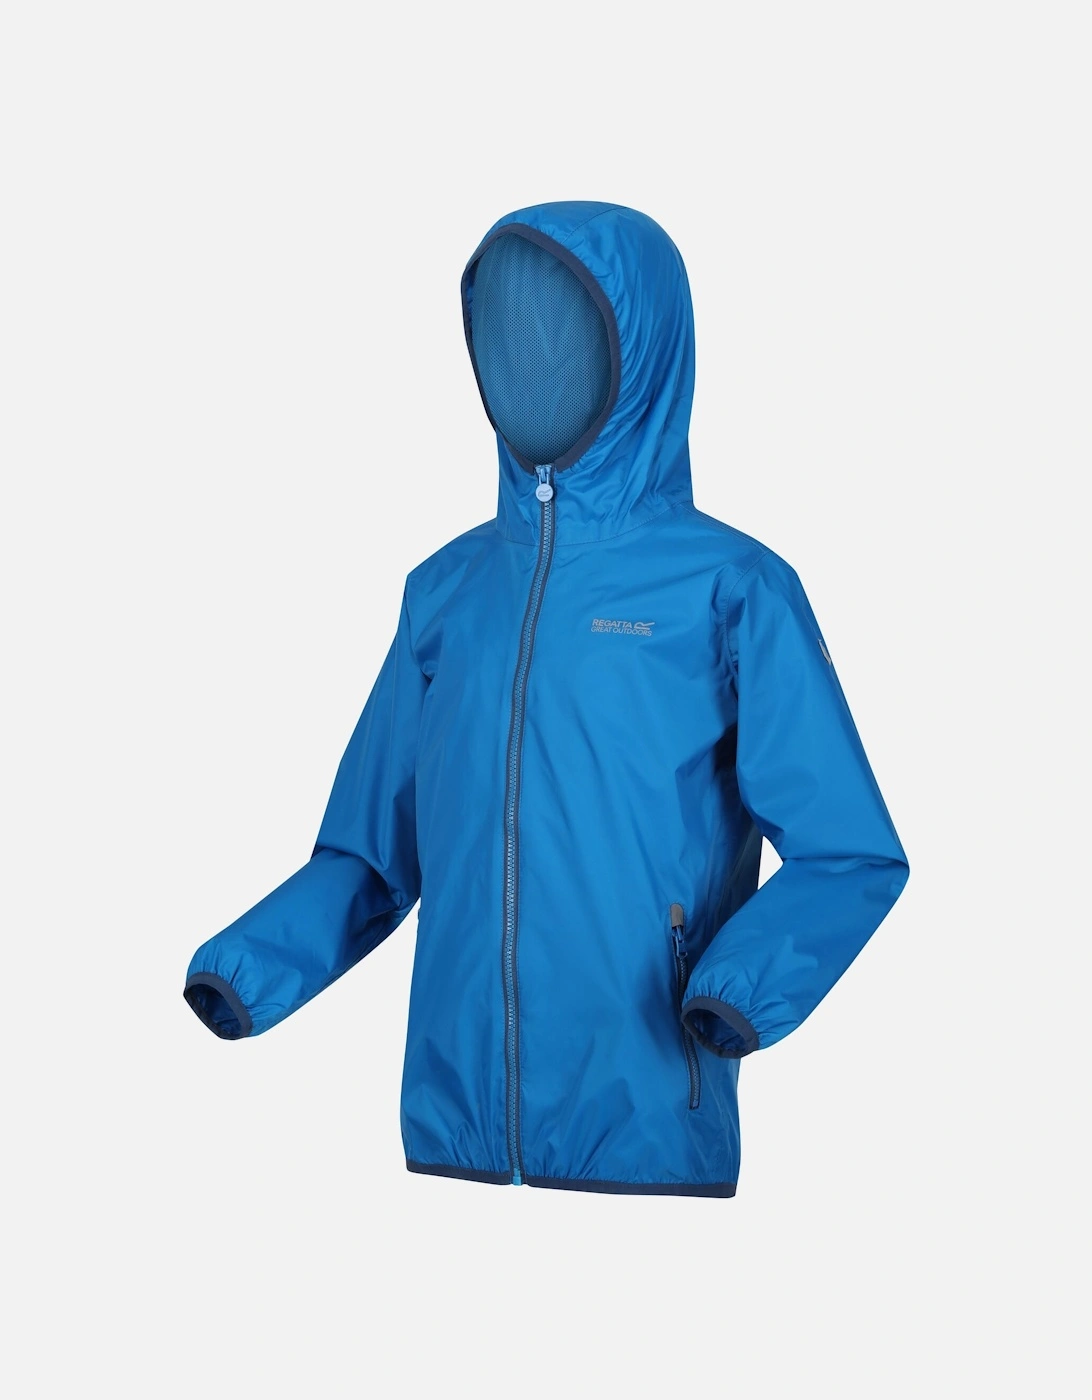 Great Outdoors Childrens/Kids Lever II Packaway Rain Jacket